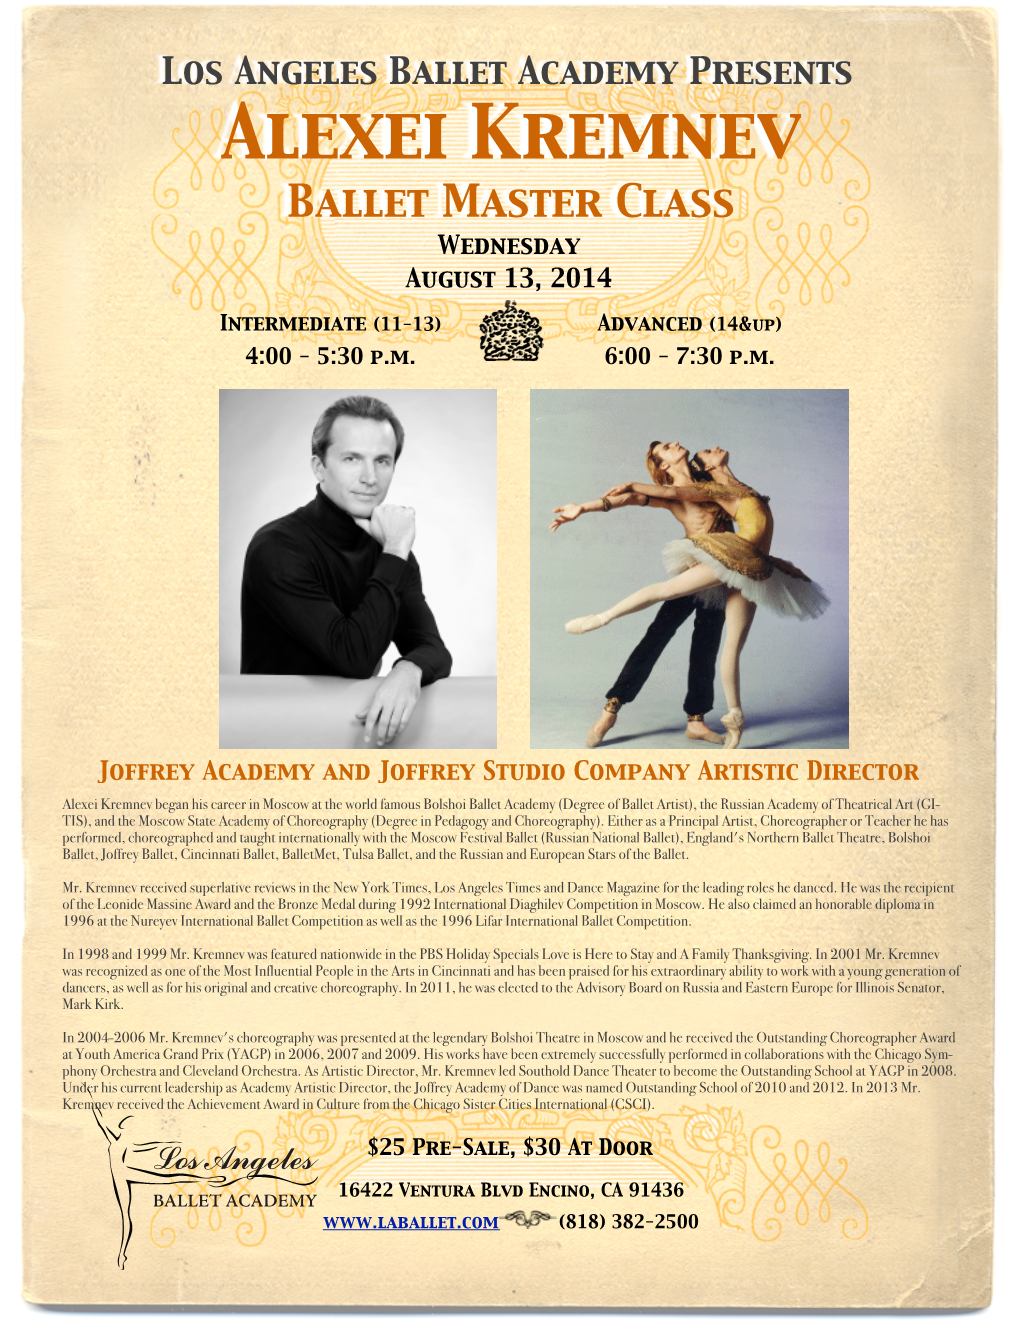 Alexei Kremnev Ballet Master Class Wednesday August 13, 2014